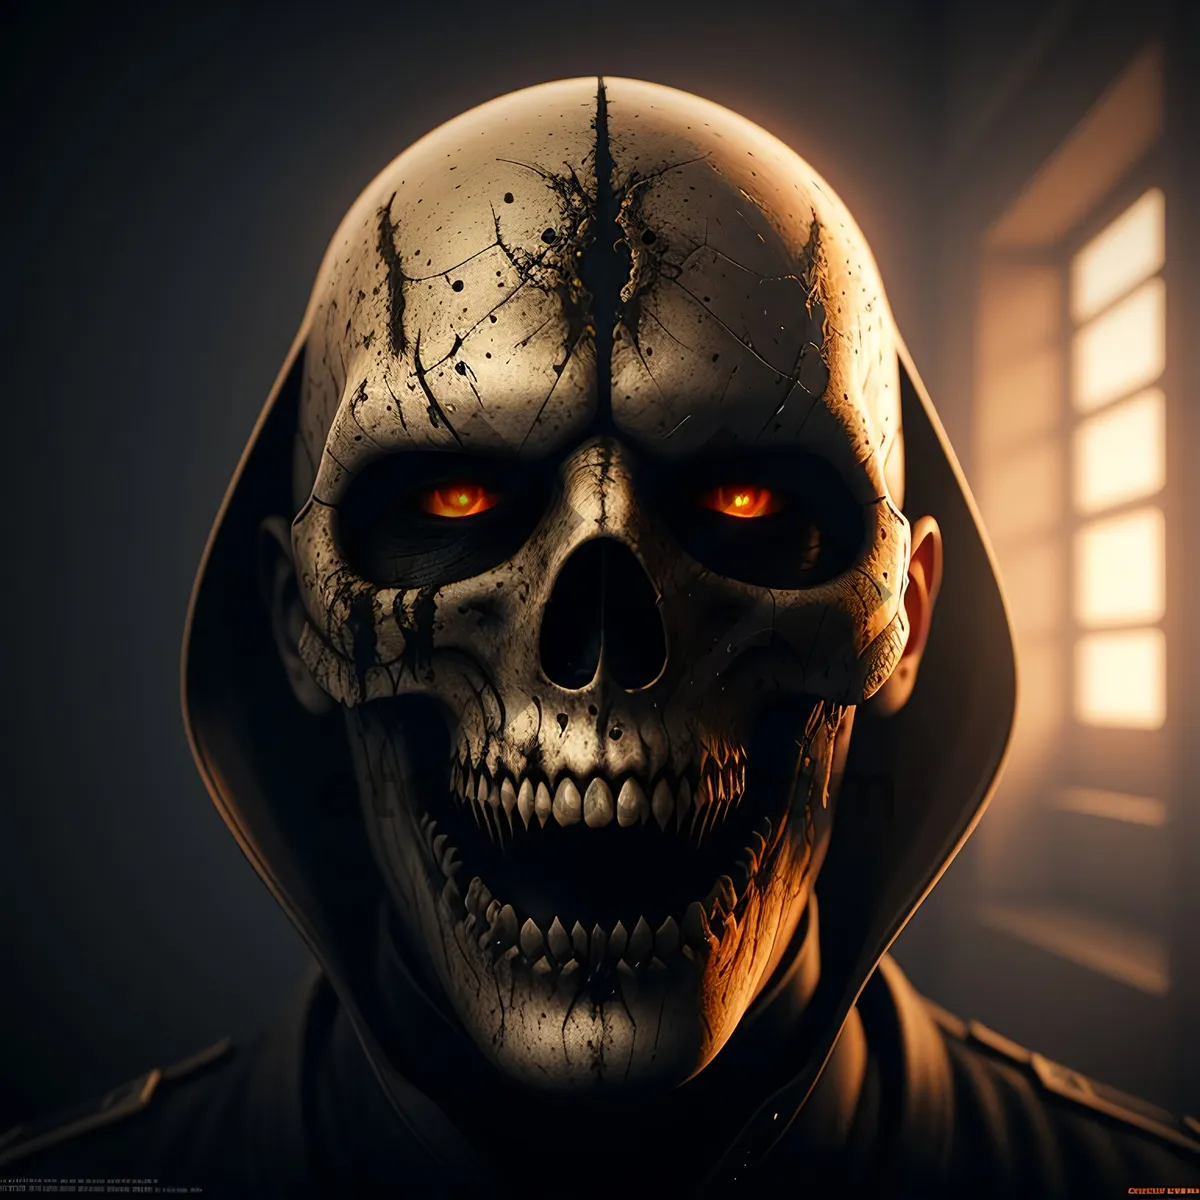 Picture of Sinister Skull Mask in Dark Cemetery